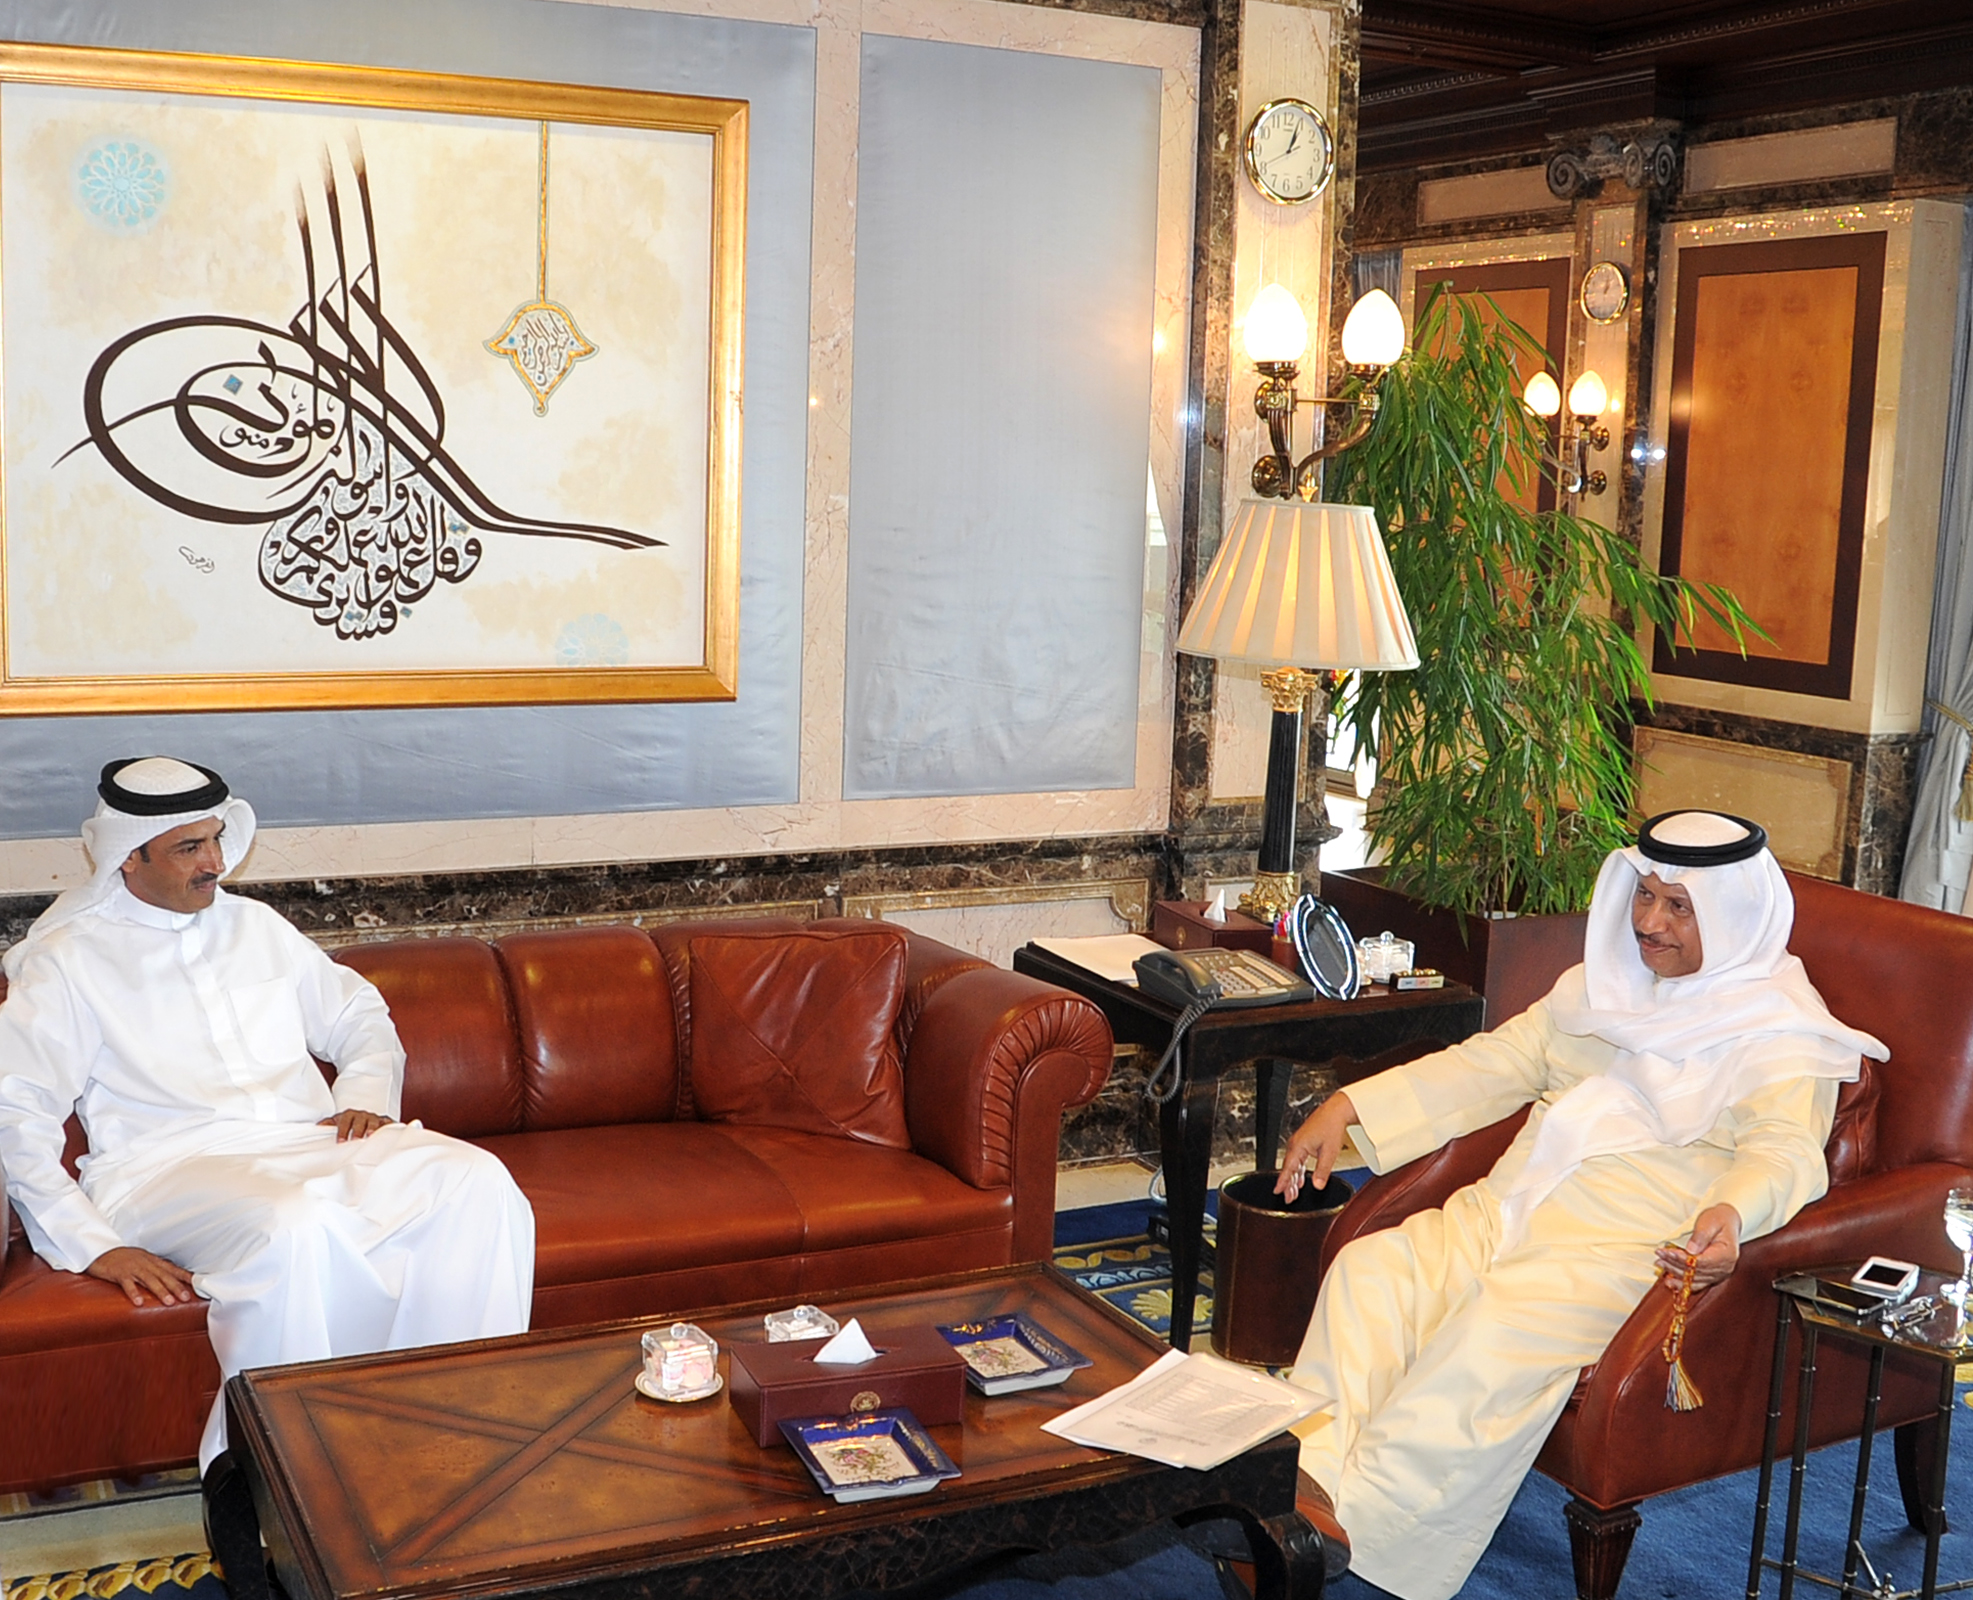 His Highness the Prime Minister Sheikh Jaber Al-Mubarak Al-Hamad Al-Sabah received Kuwaiti shooting champion Fahad Al-Daihani